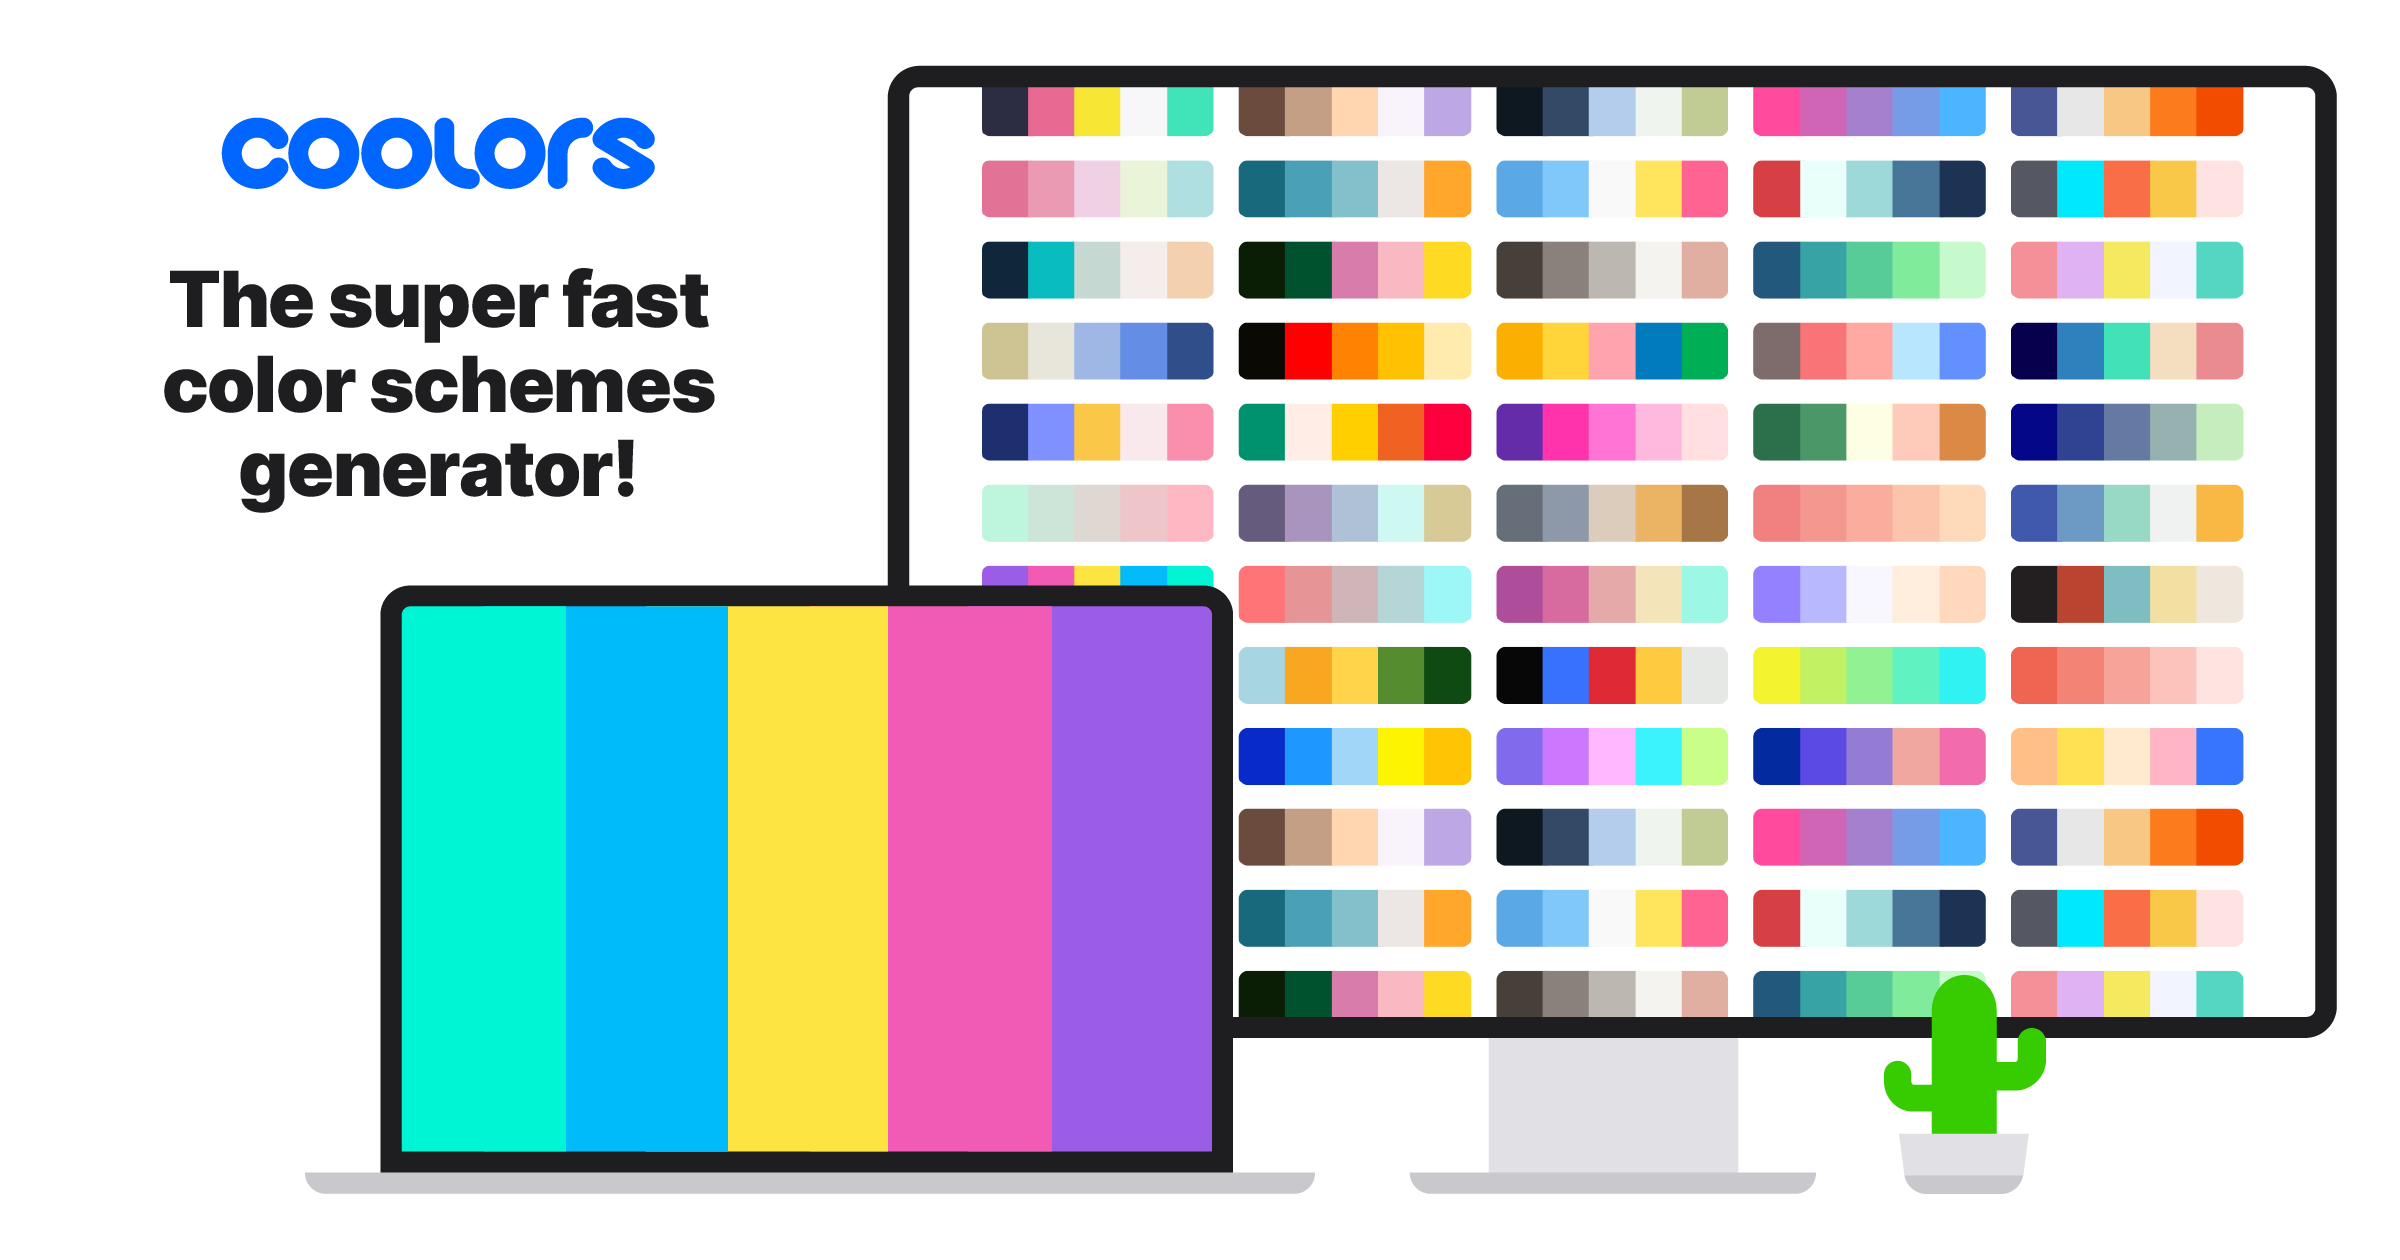 Coolors - The super fast color schemes generator!